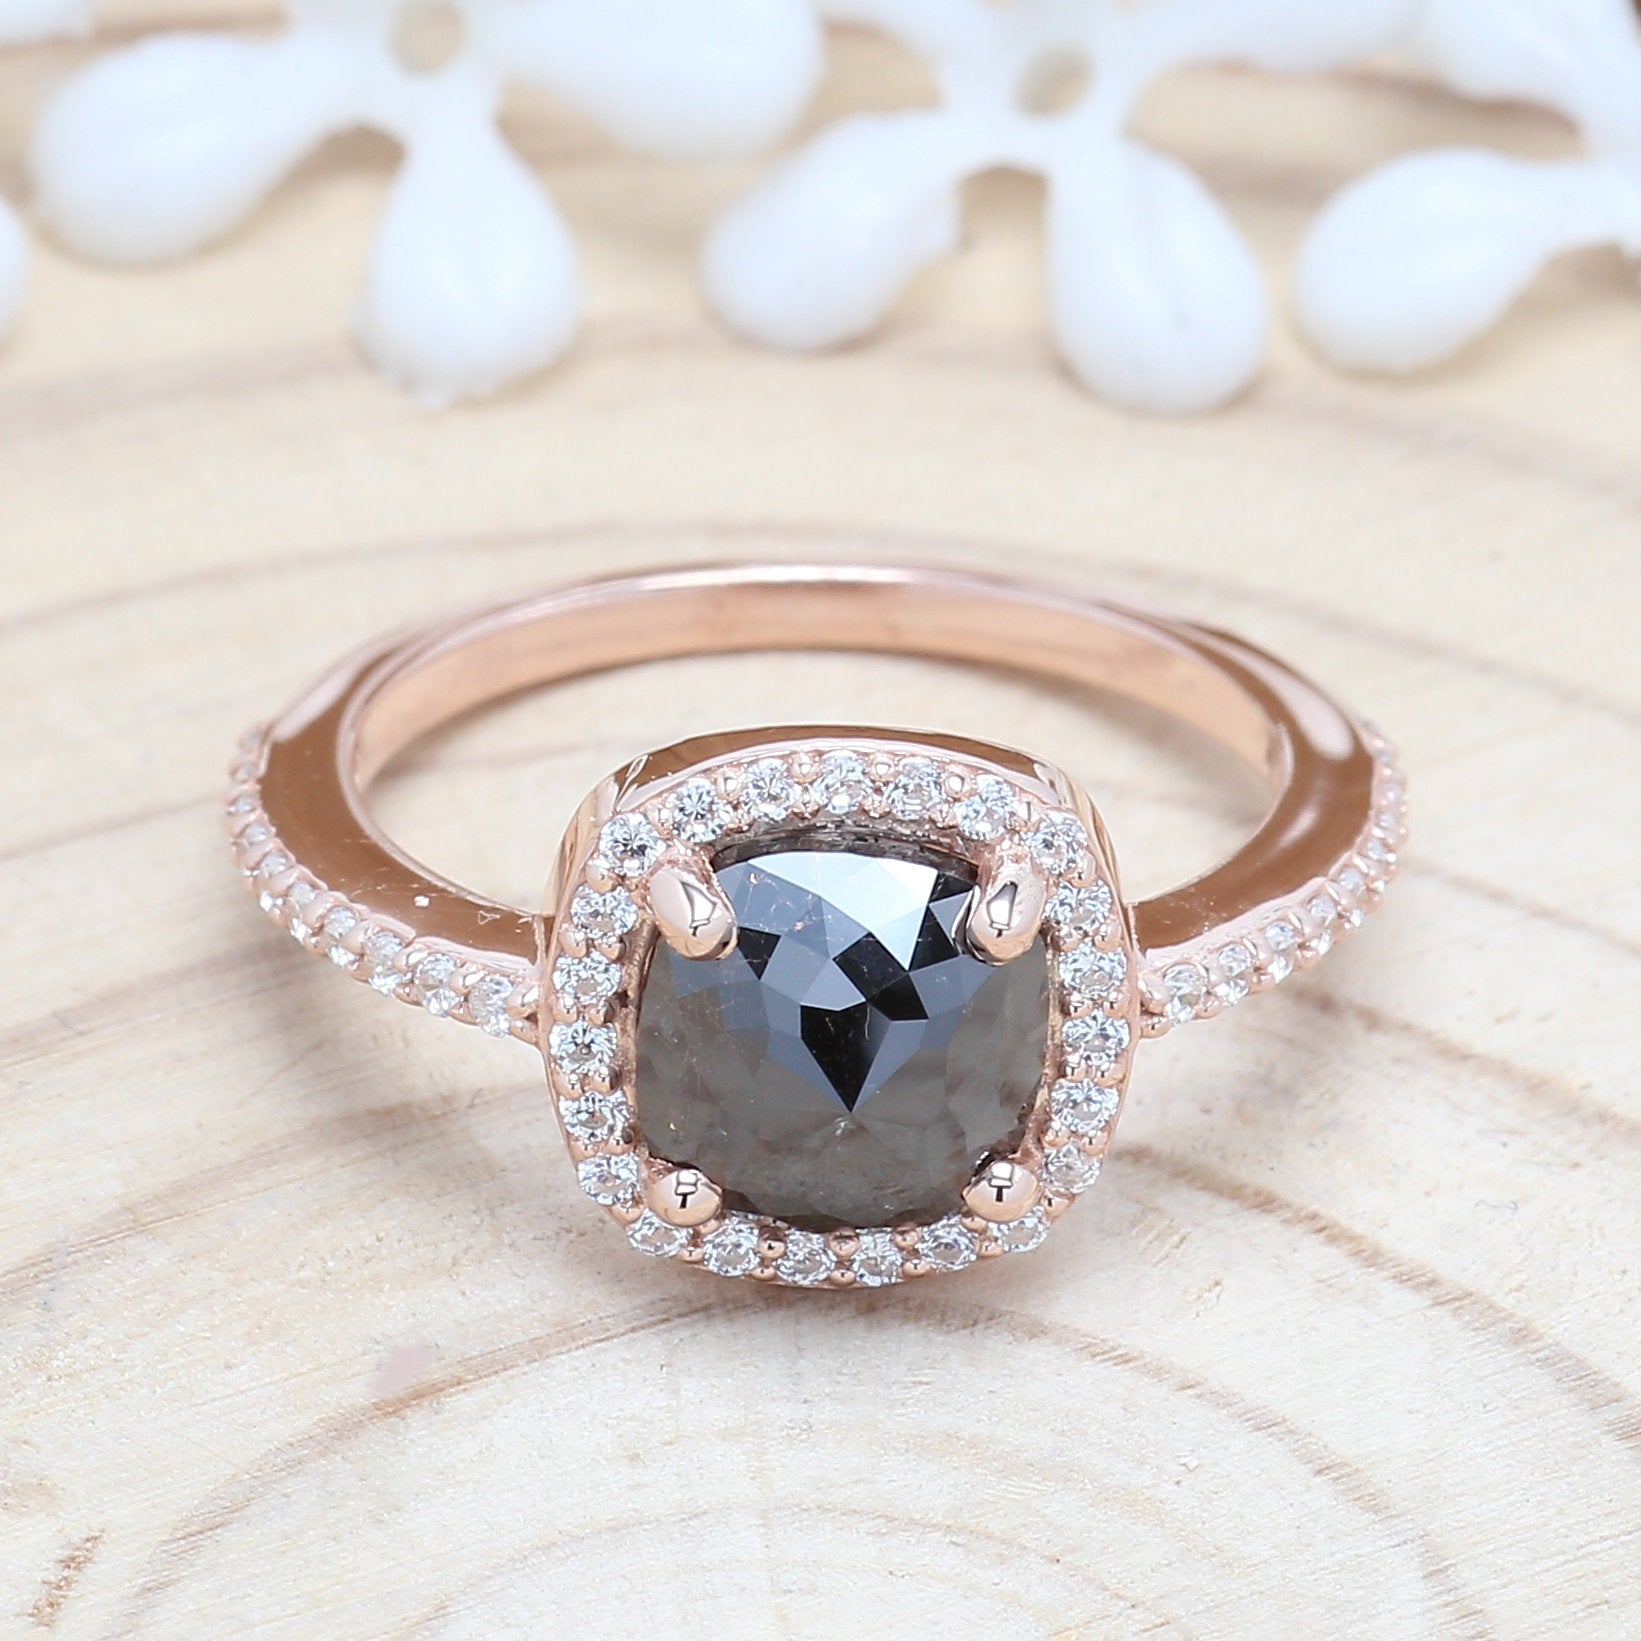 Black Cushion Diamond 14K Solid Rose White Yellow Gold Ring Engagement Wedding Gift Ring KD856